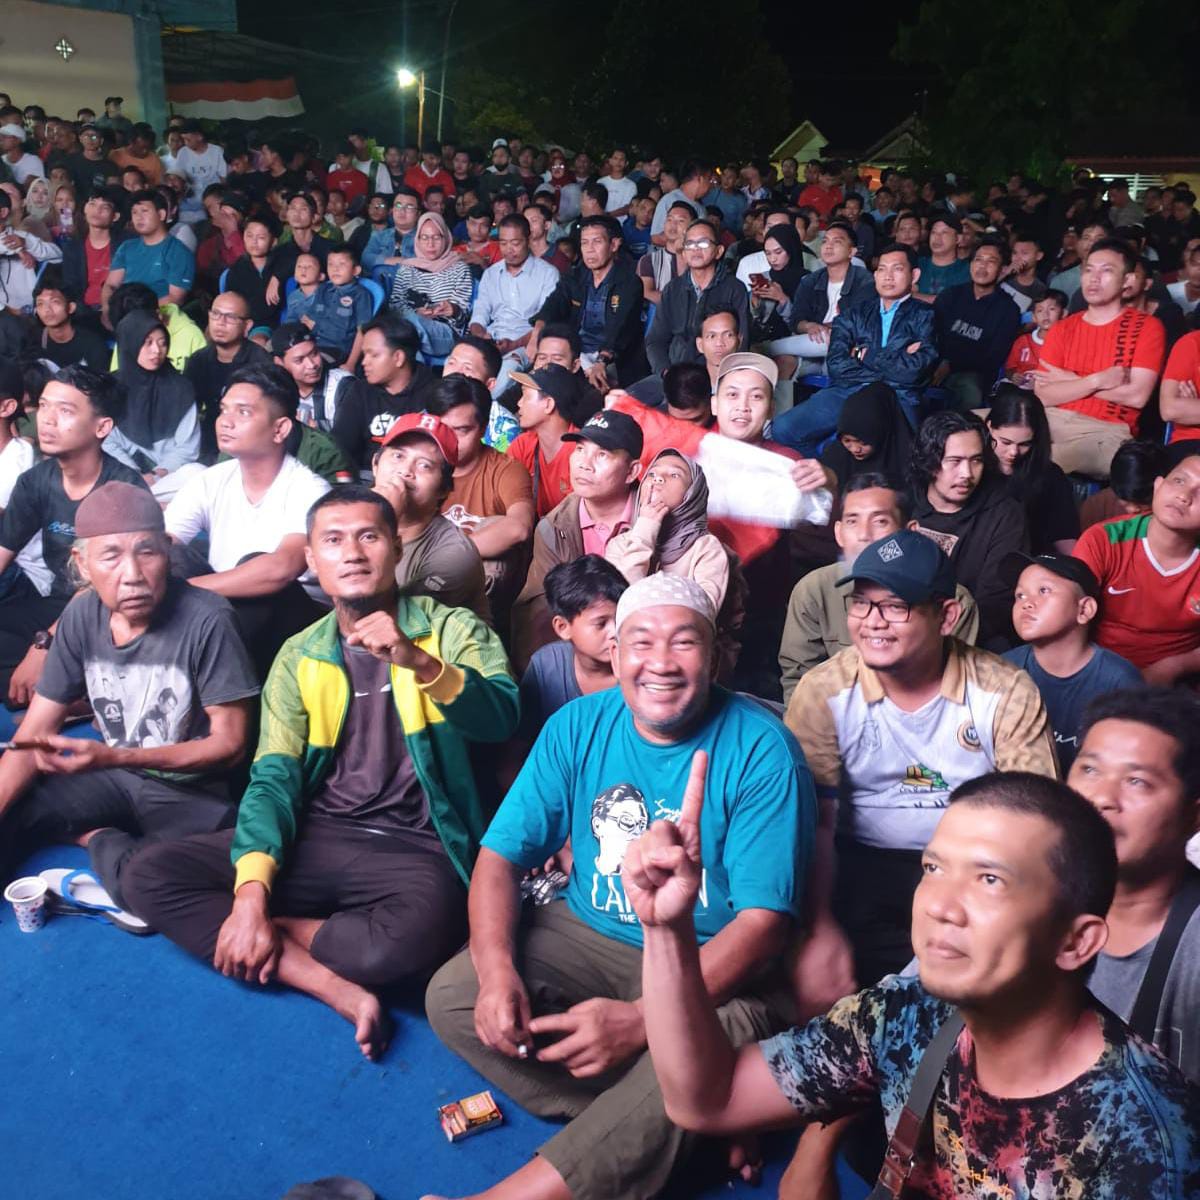 Ribuan Penonton Serbu Nobar Bersama Yoppy Karim, Jangan Tunda Lagi Saatnya Linggau Juara!